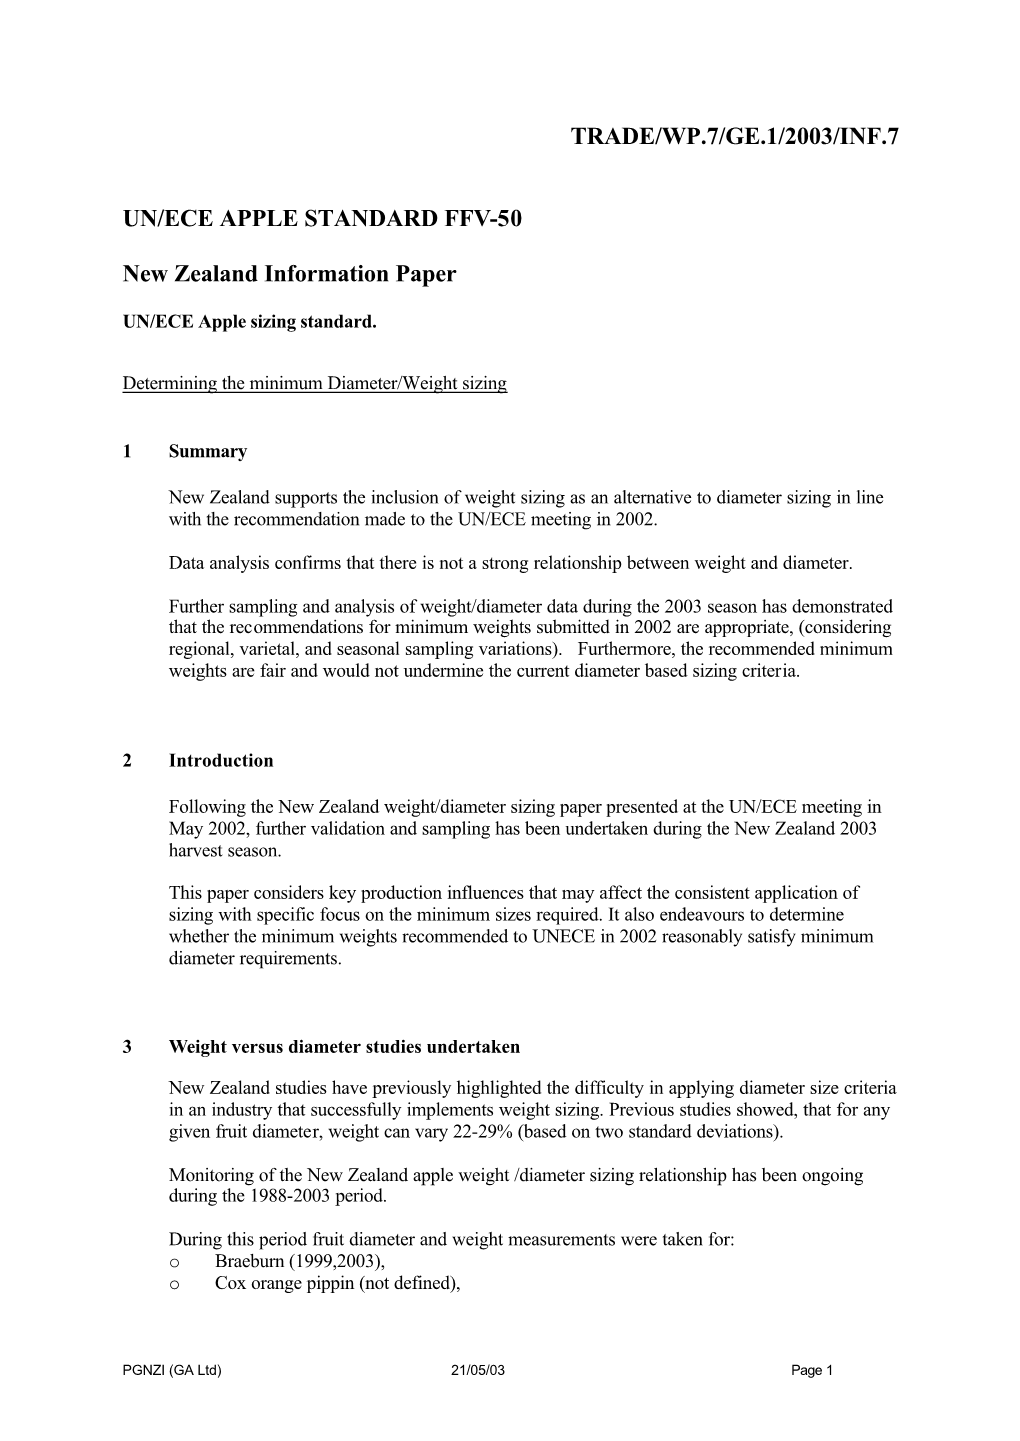 TRADE/WP.7/GE.1/2003/INF.7 UN/ECE APPLE STANDARD FFV-50 New Zealand Information Paper